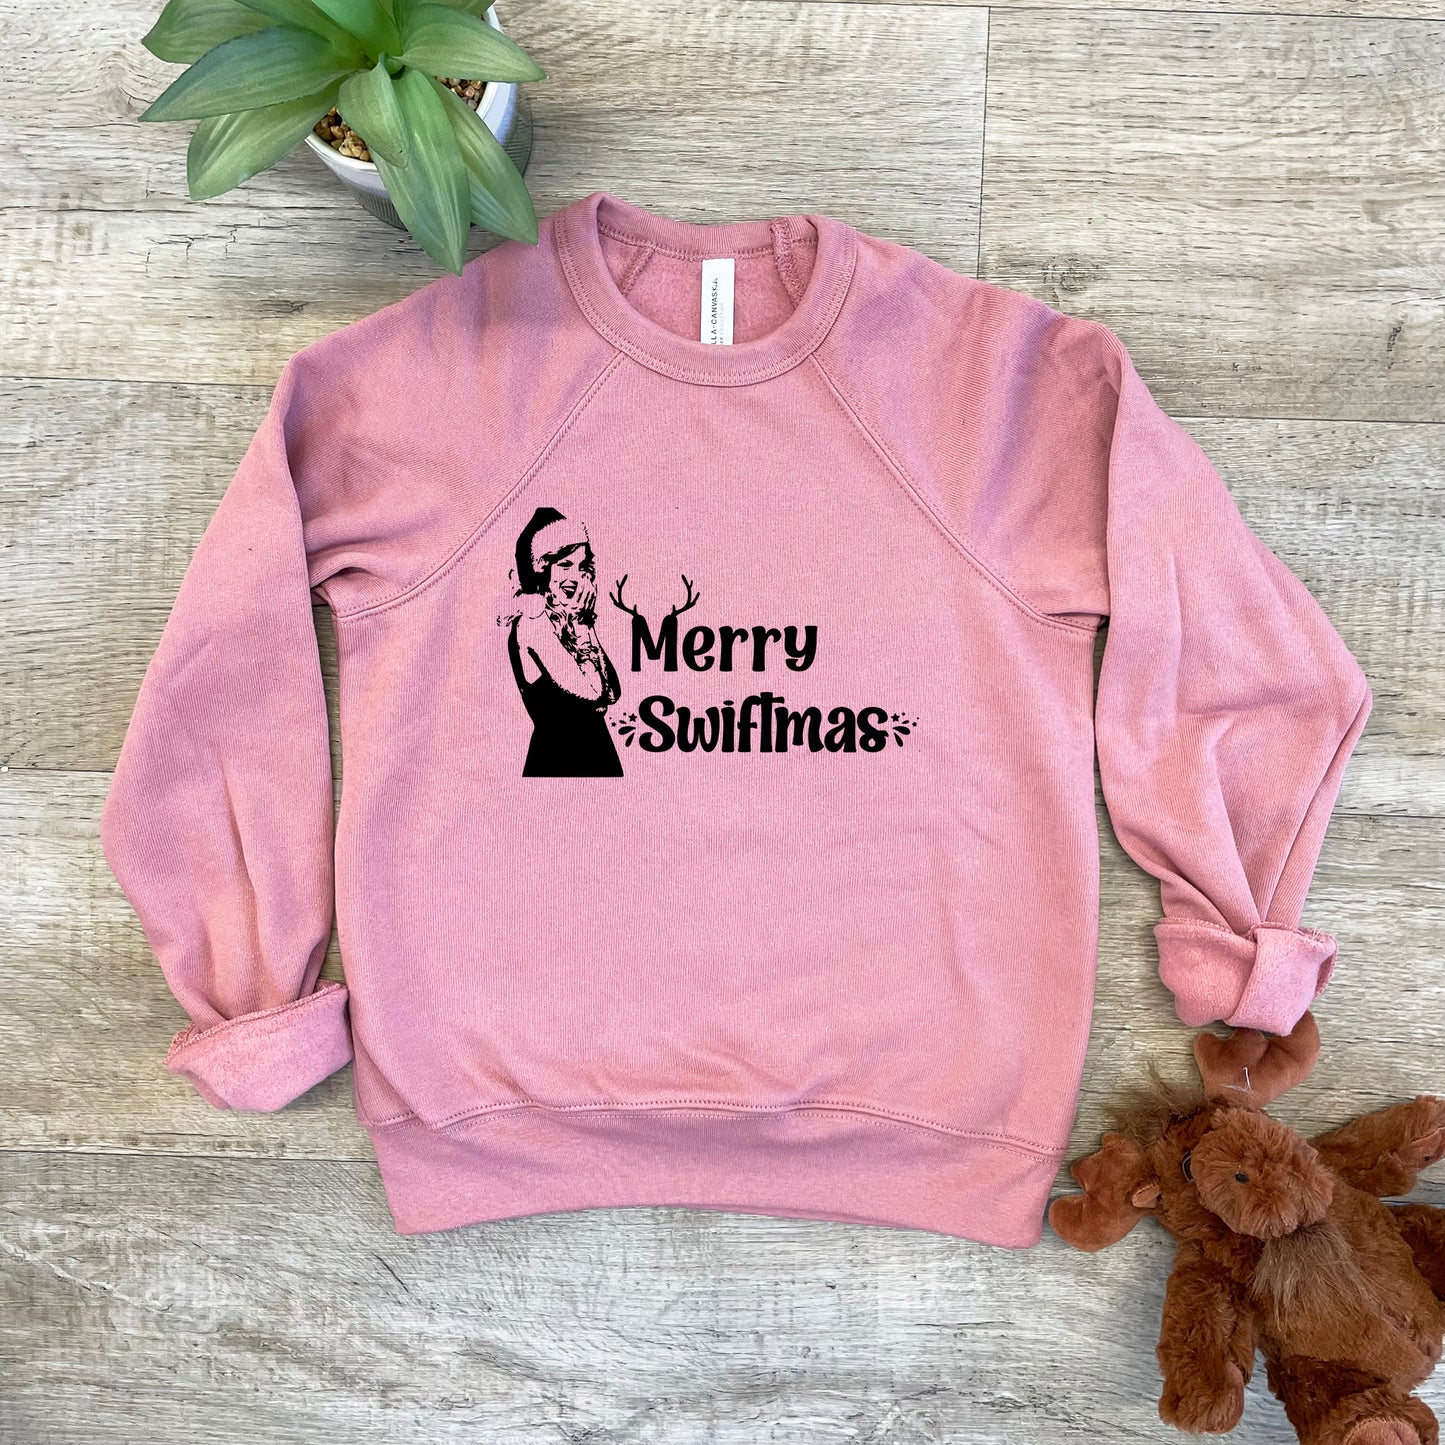 Merry Swiftmas - Kid's Sweatshirt - Heather Gray or Mauve